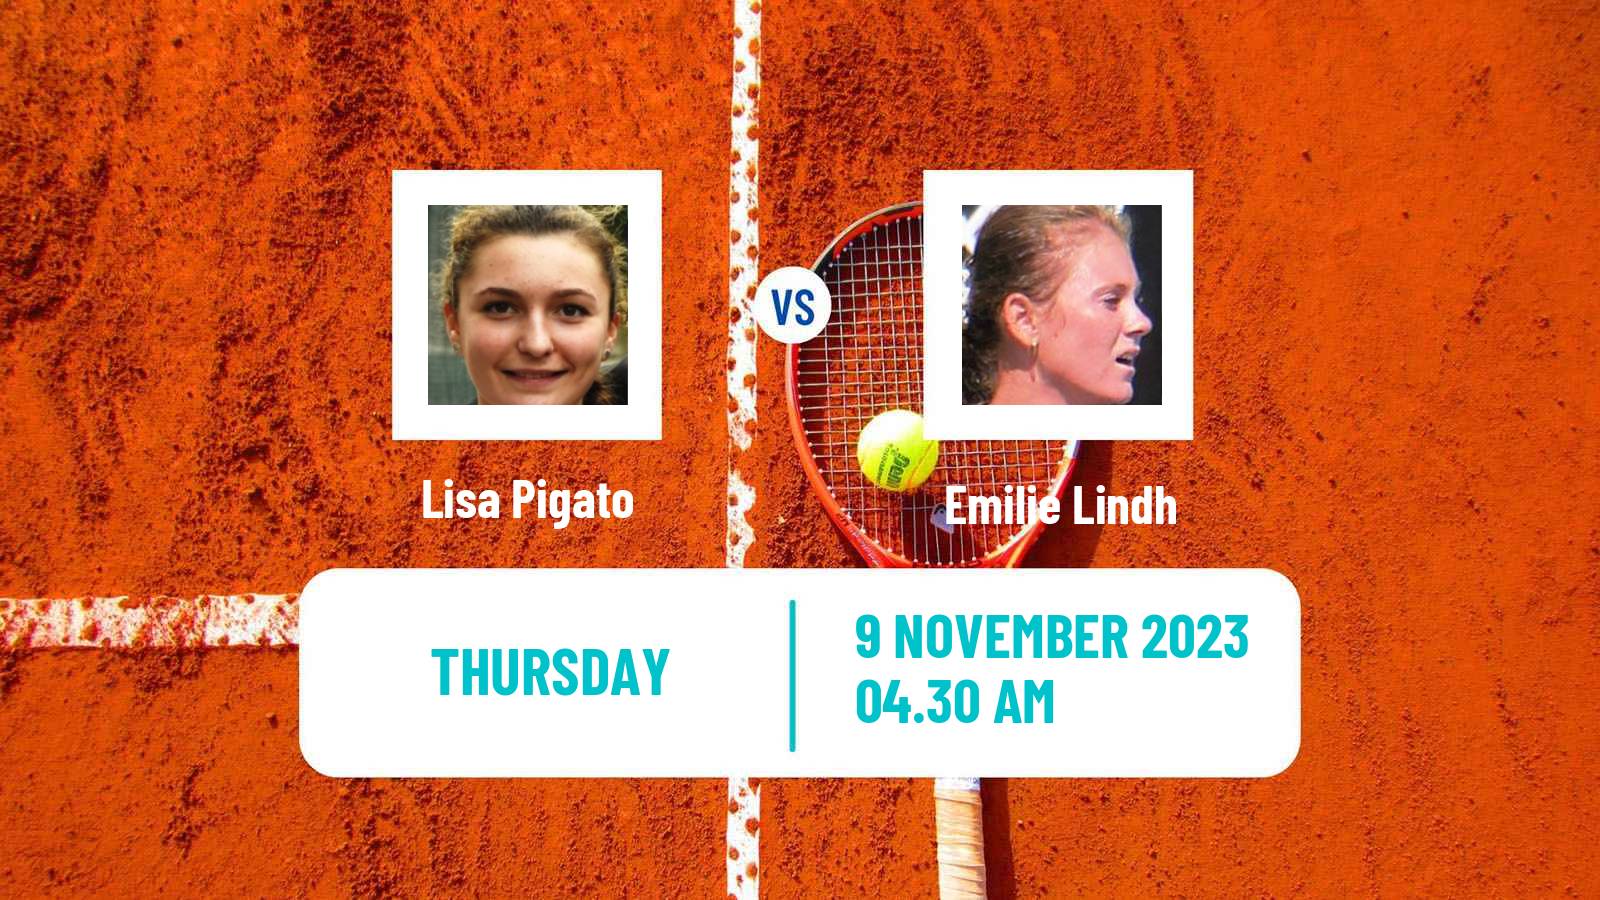 Tennis ITF W25 Solarino 2 Women Lisa Pigato - Emilie Lindh